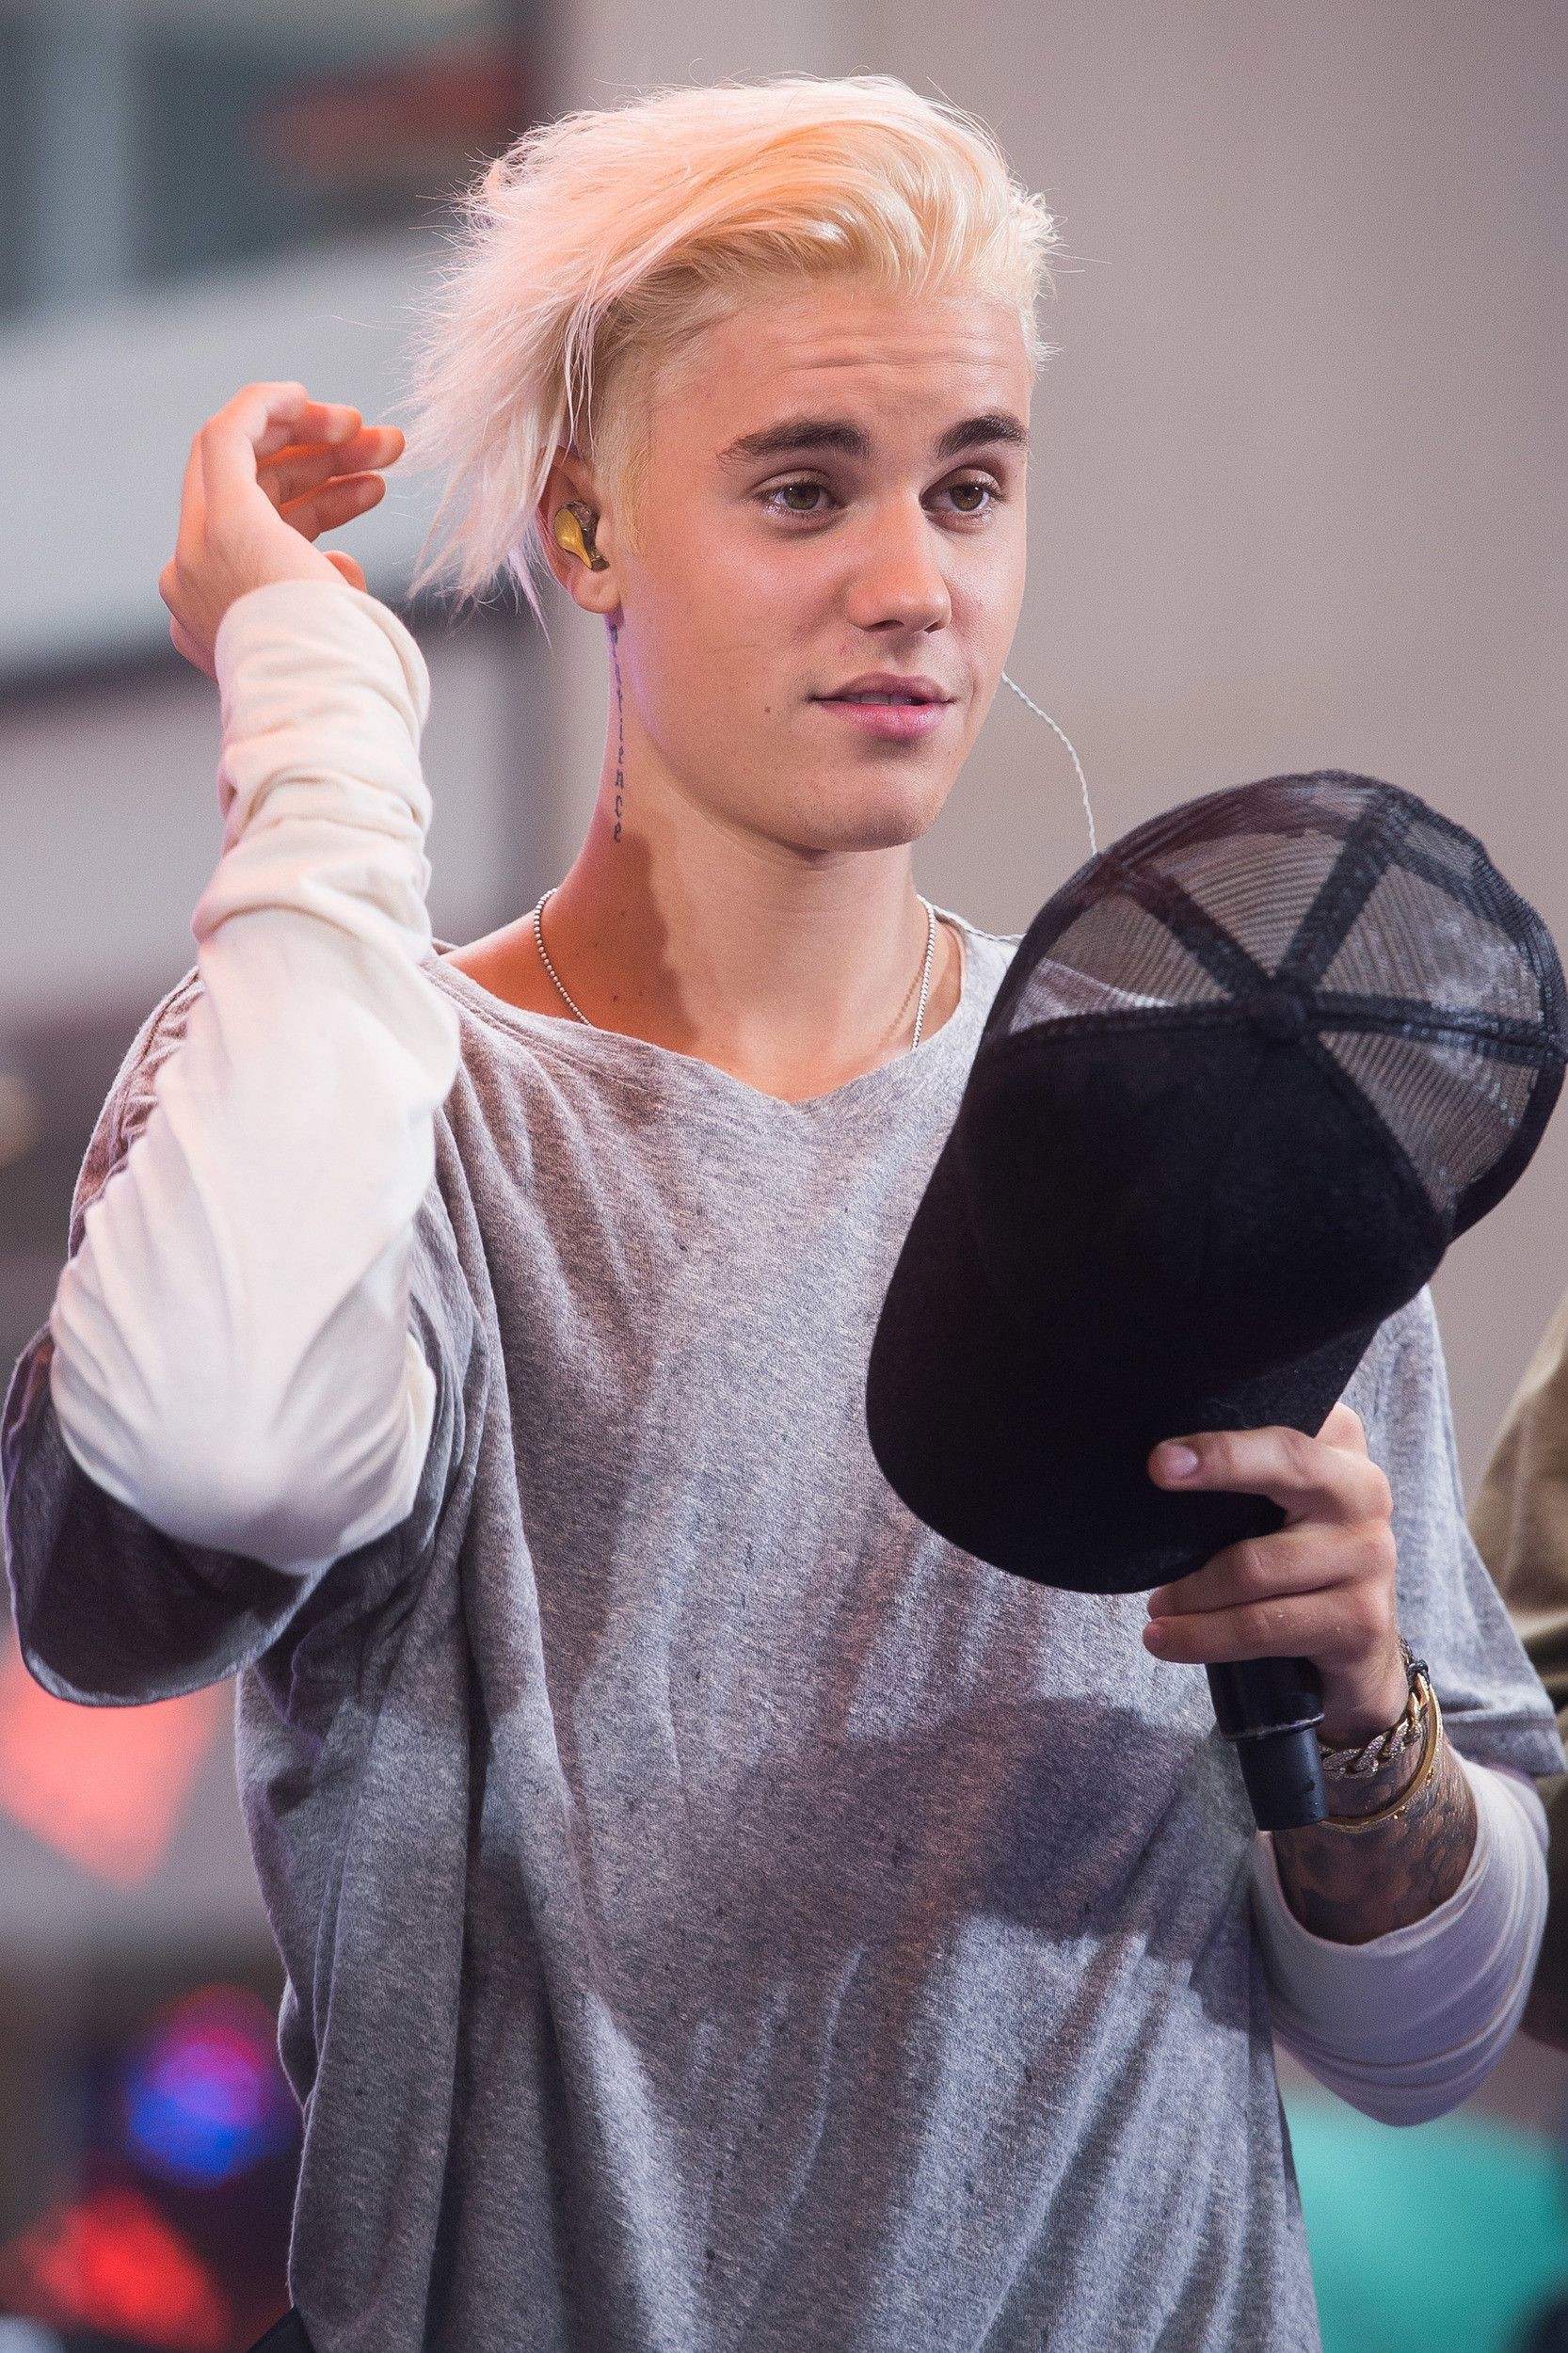 100+] Justin Bieber Wallpapers | Wallpapers.com